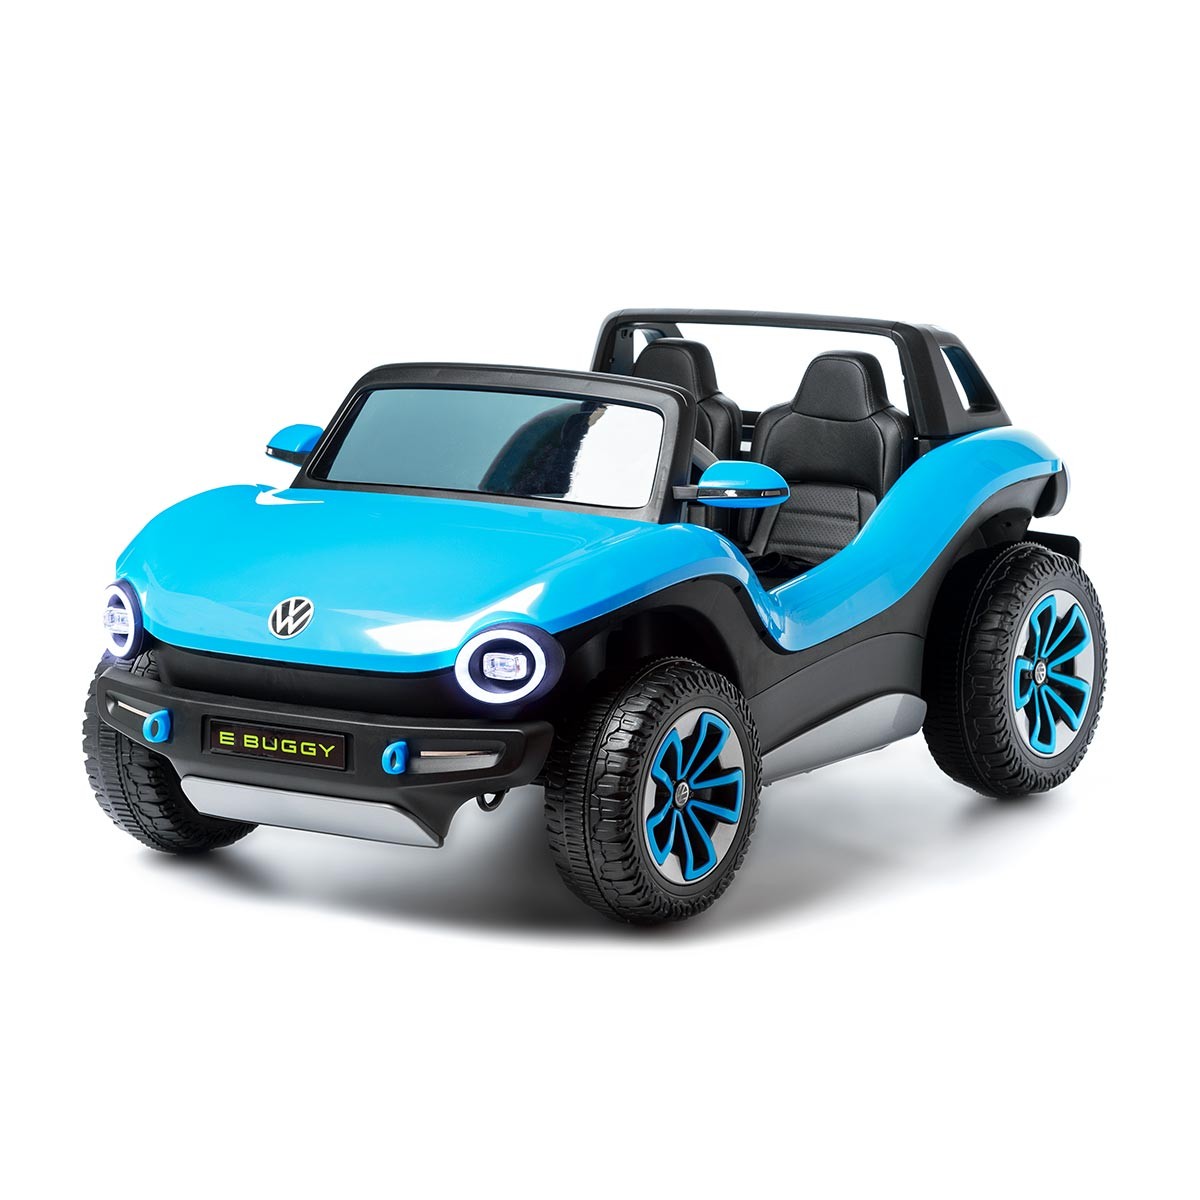 Sillon Infantil Cars Azul! - Nuevo Modelo! Consulta X Dobles